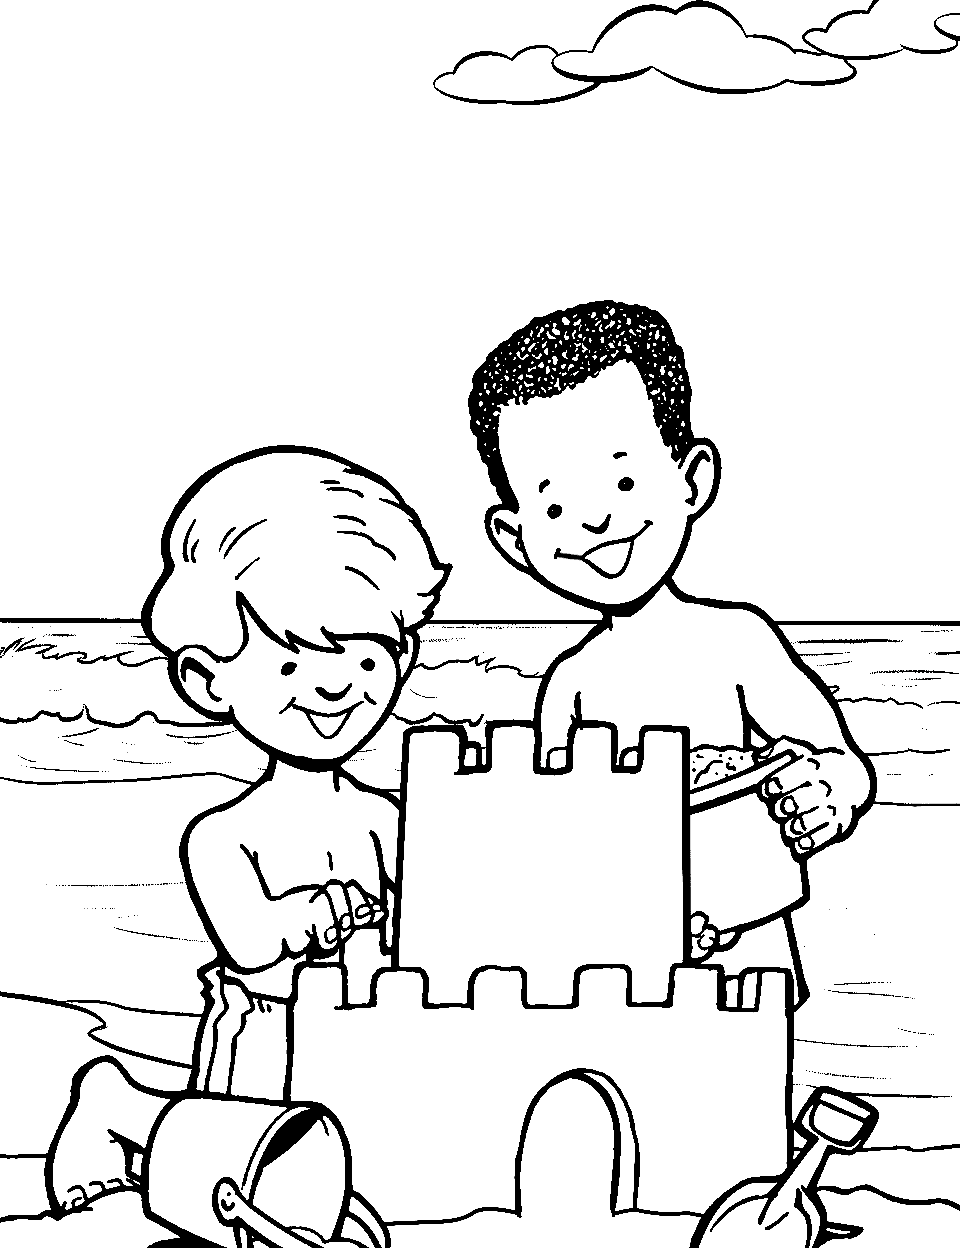 Kids Building a Sandcastle Ocean Coloring Page - Two kids building a sandcastle on the beach.